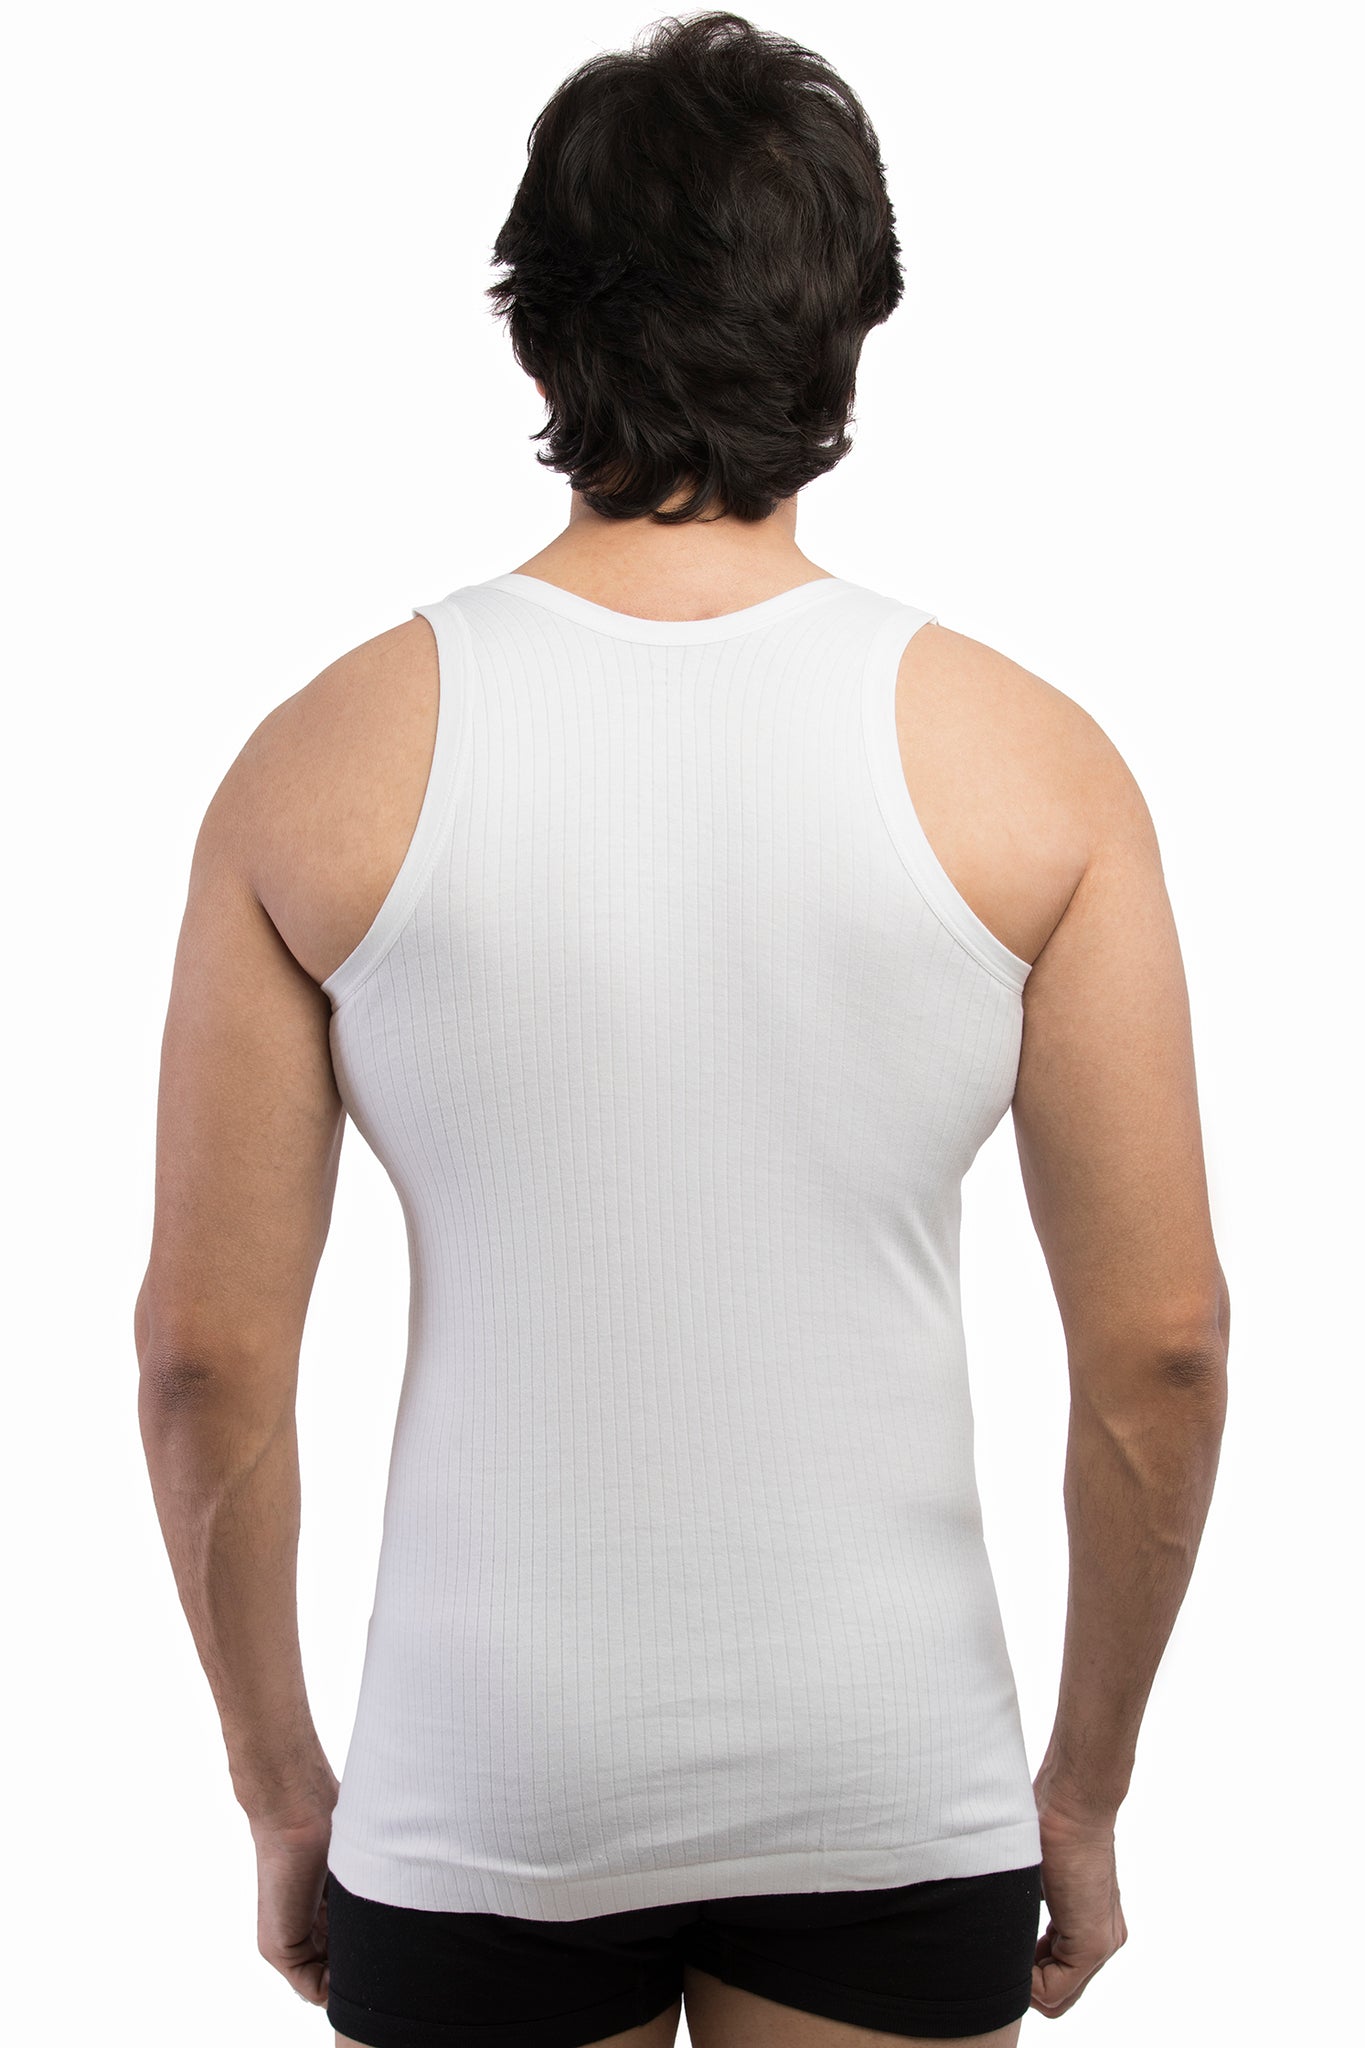 VIP Linear Round Neck Men's Cotton Vest - White